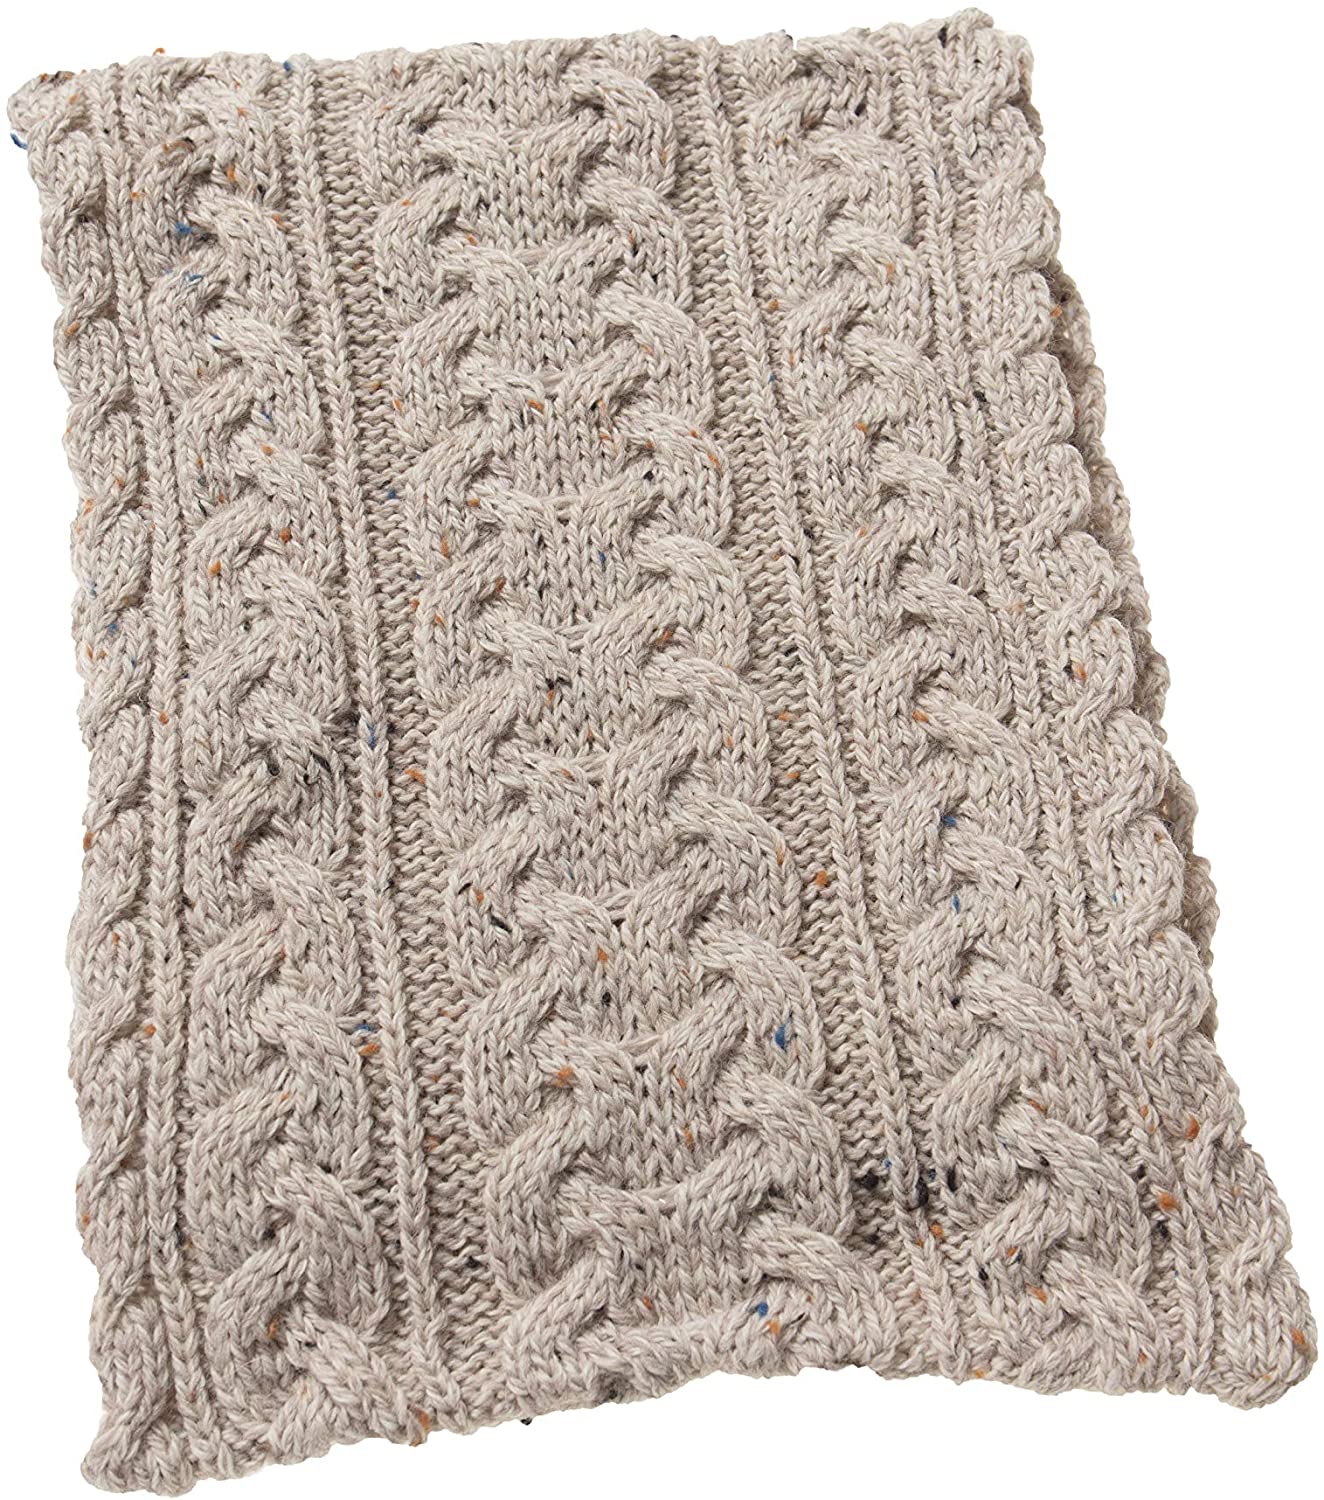 Aran Crafts Irish Cable Knitted Heavyweight Scarf 10x64 100% Merino Wool 